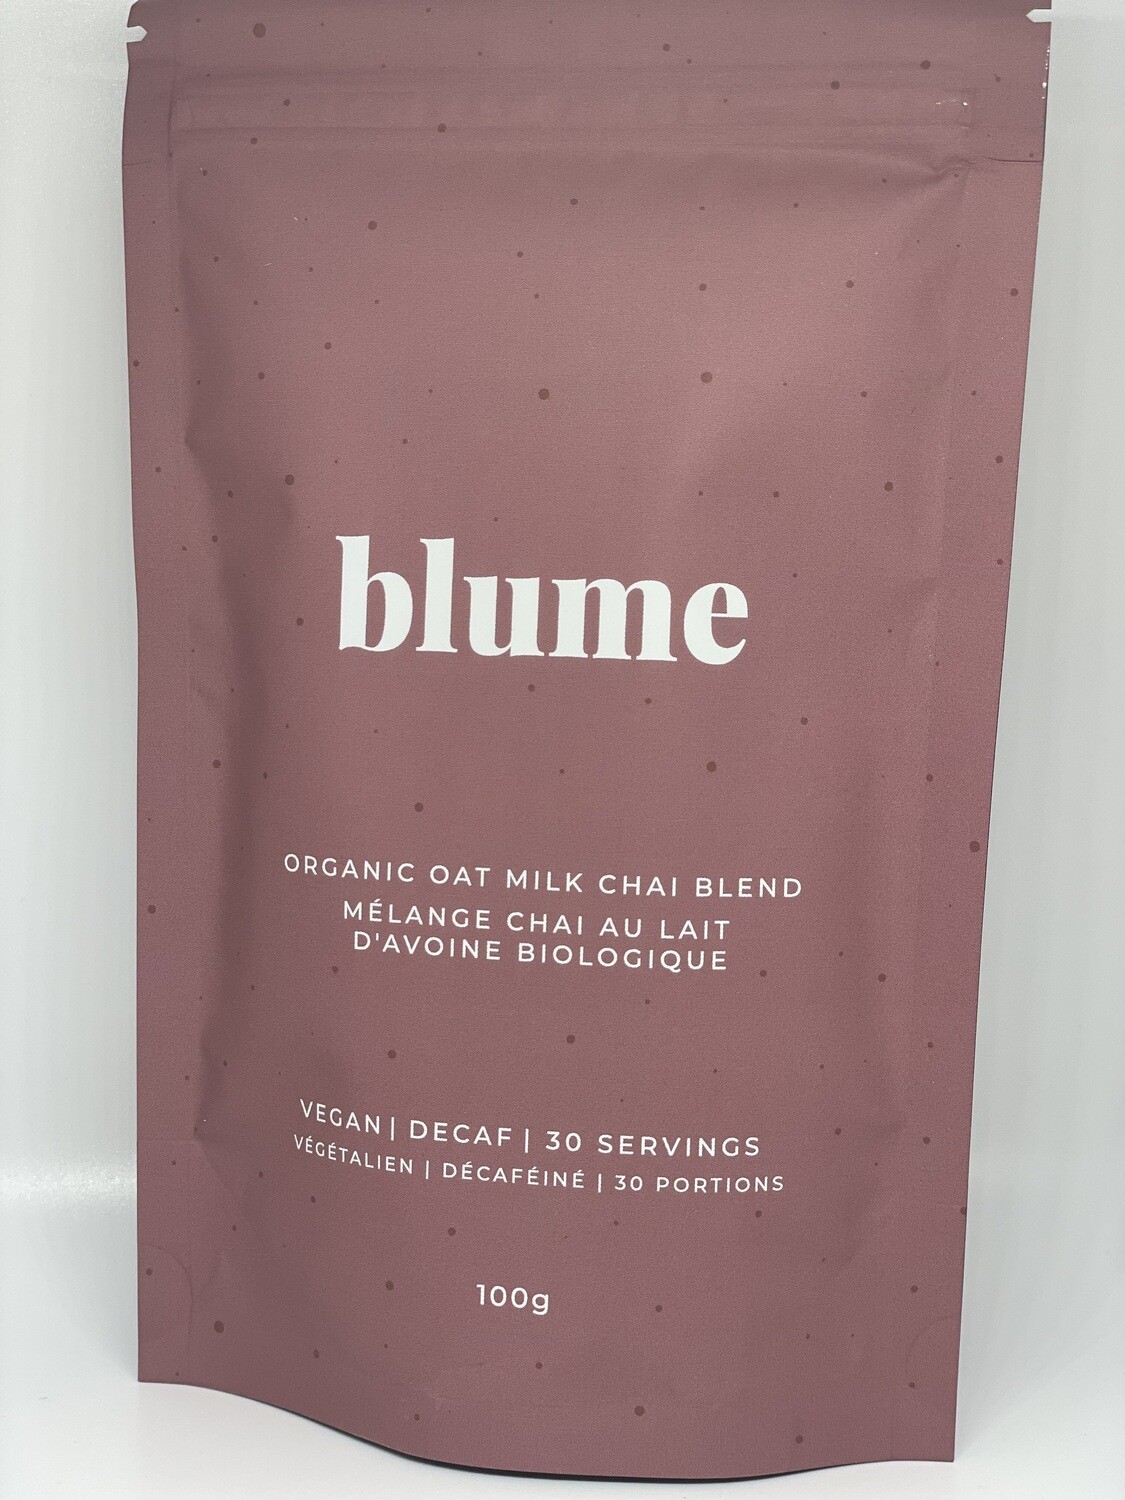 blume - Oat Milk Chai Blend